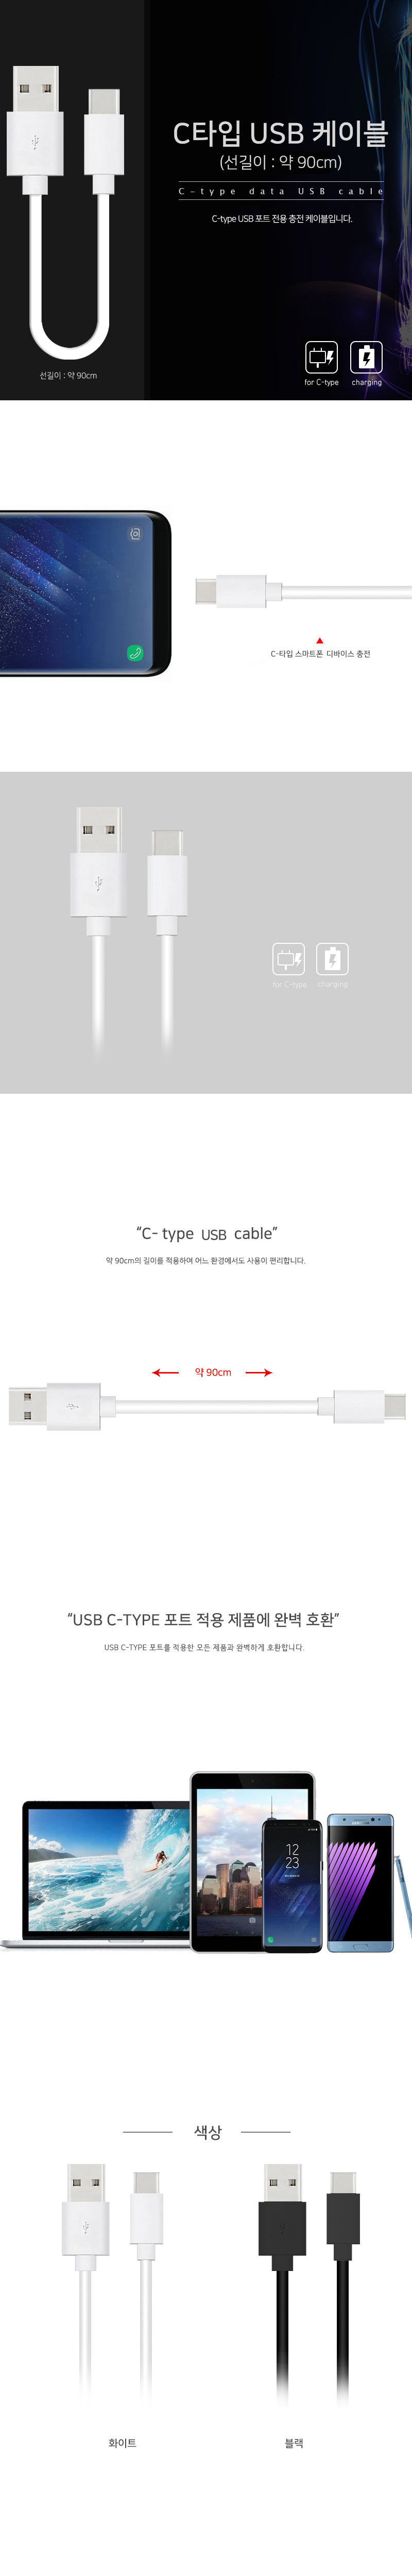 C type cable 90cm.jpg